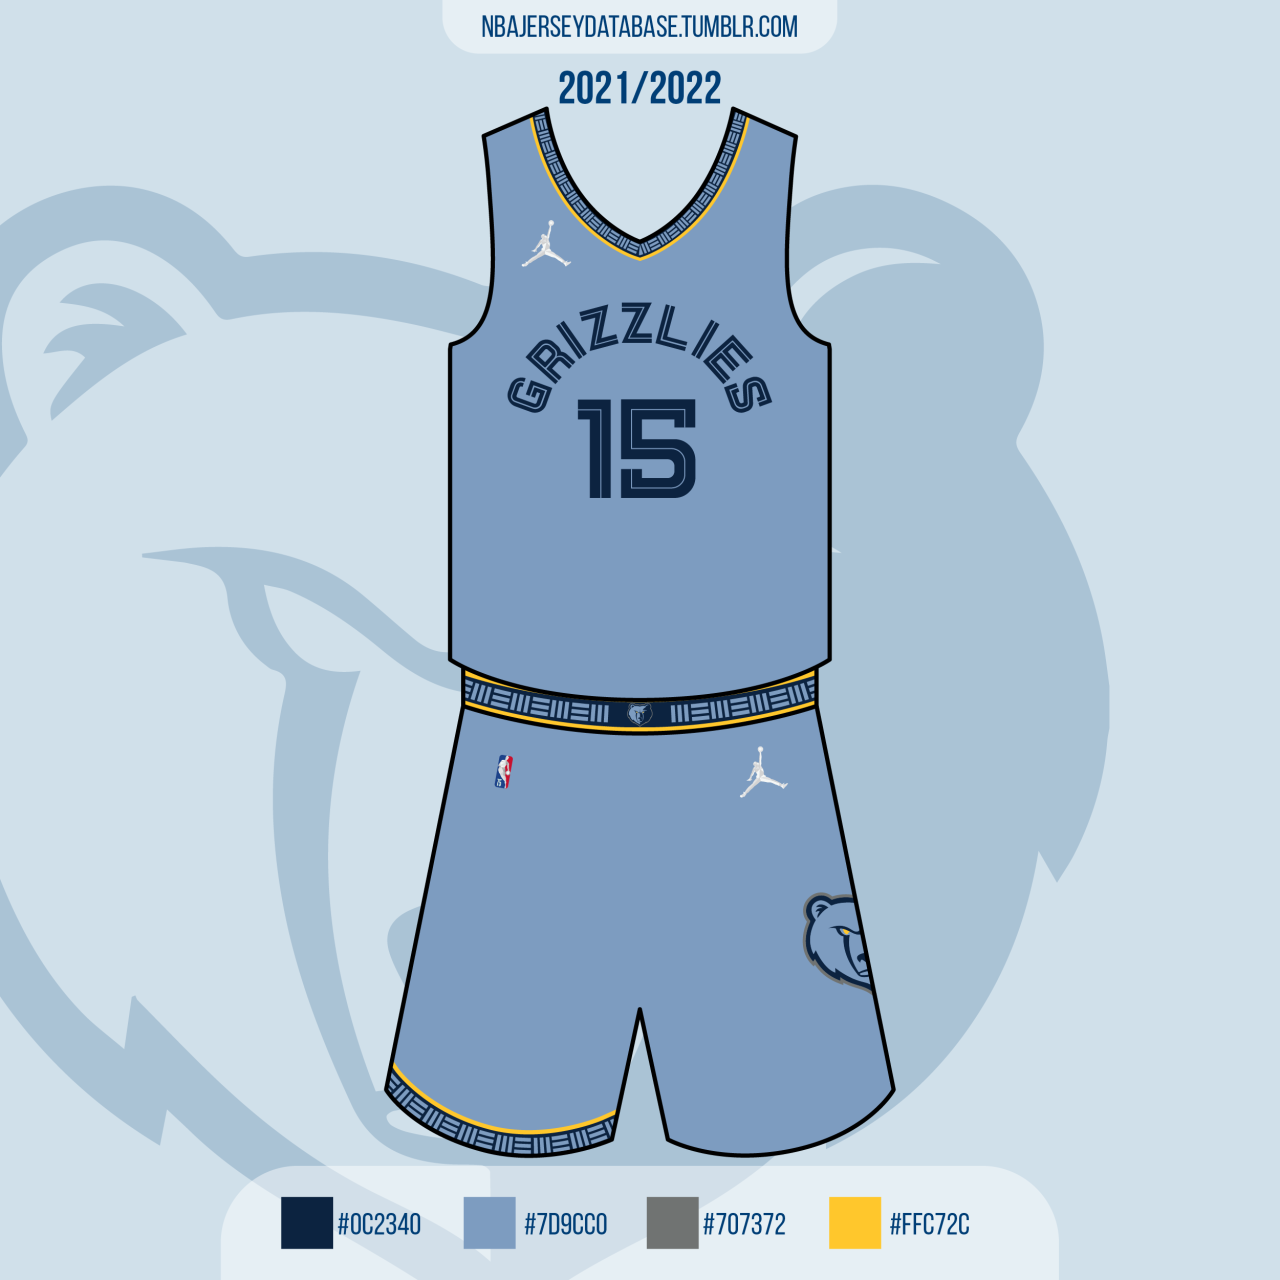 memphis grizzlies jersey layout